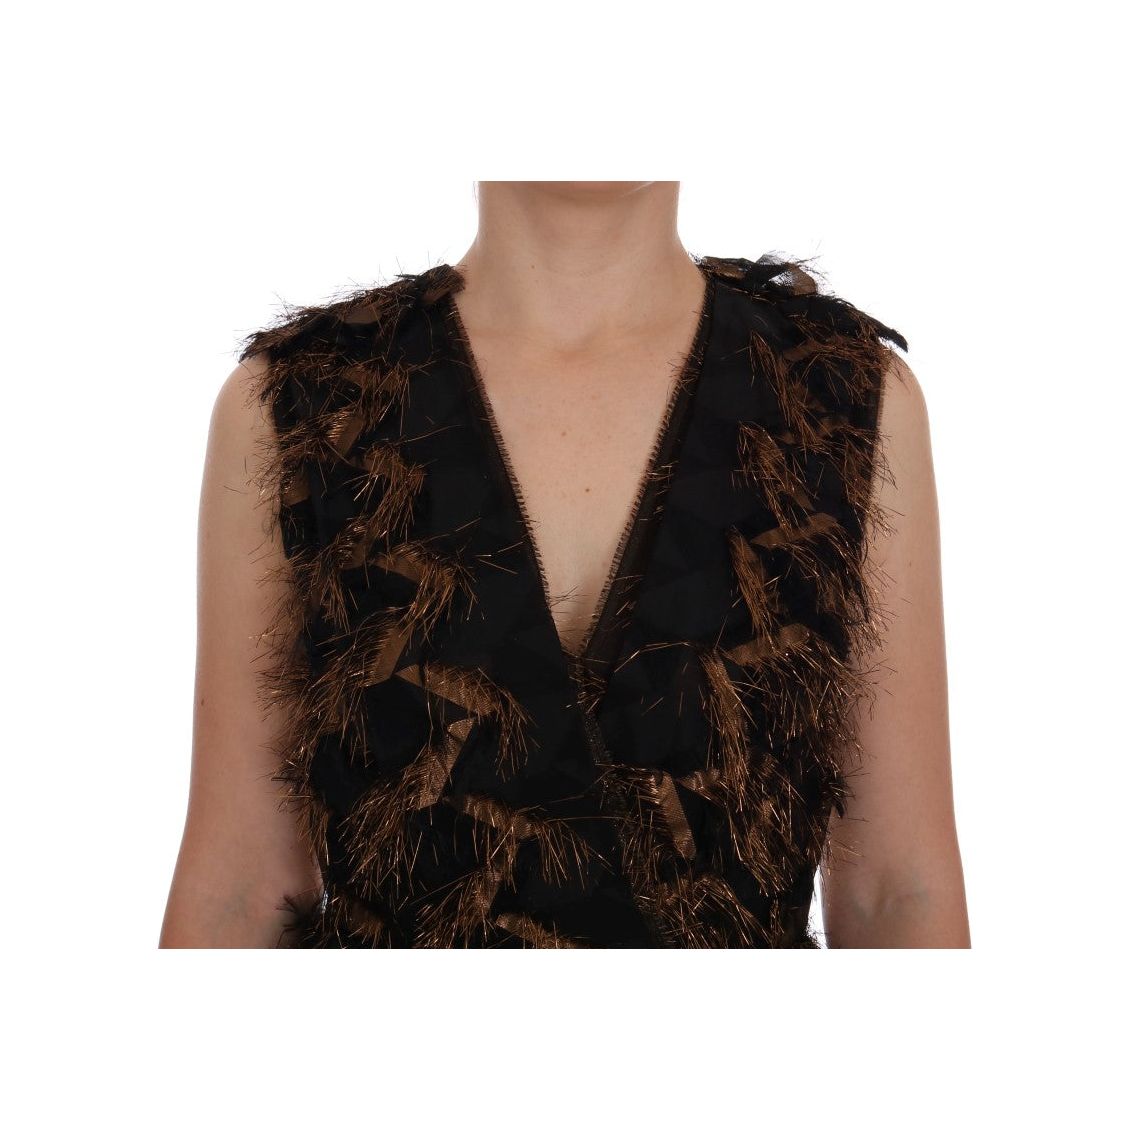 Dolce & Gabbana Elegant A-Line Full Length Sleeveless Dress black-silk-brown-fringes-a-line-dress 450867-black-silk-brown-fringes-a-line-dress-4.jpg